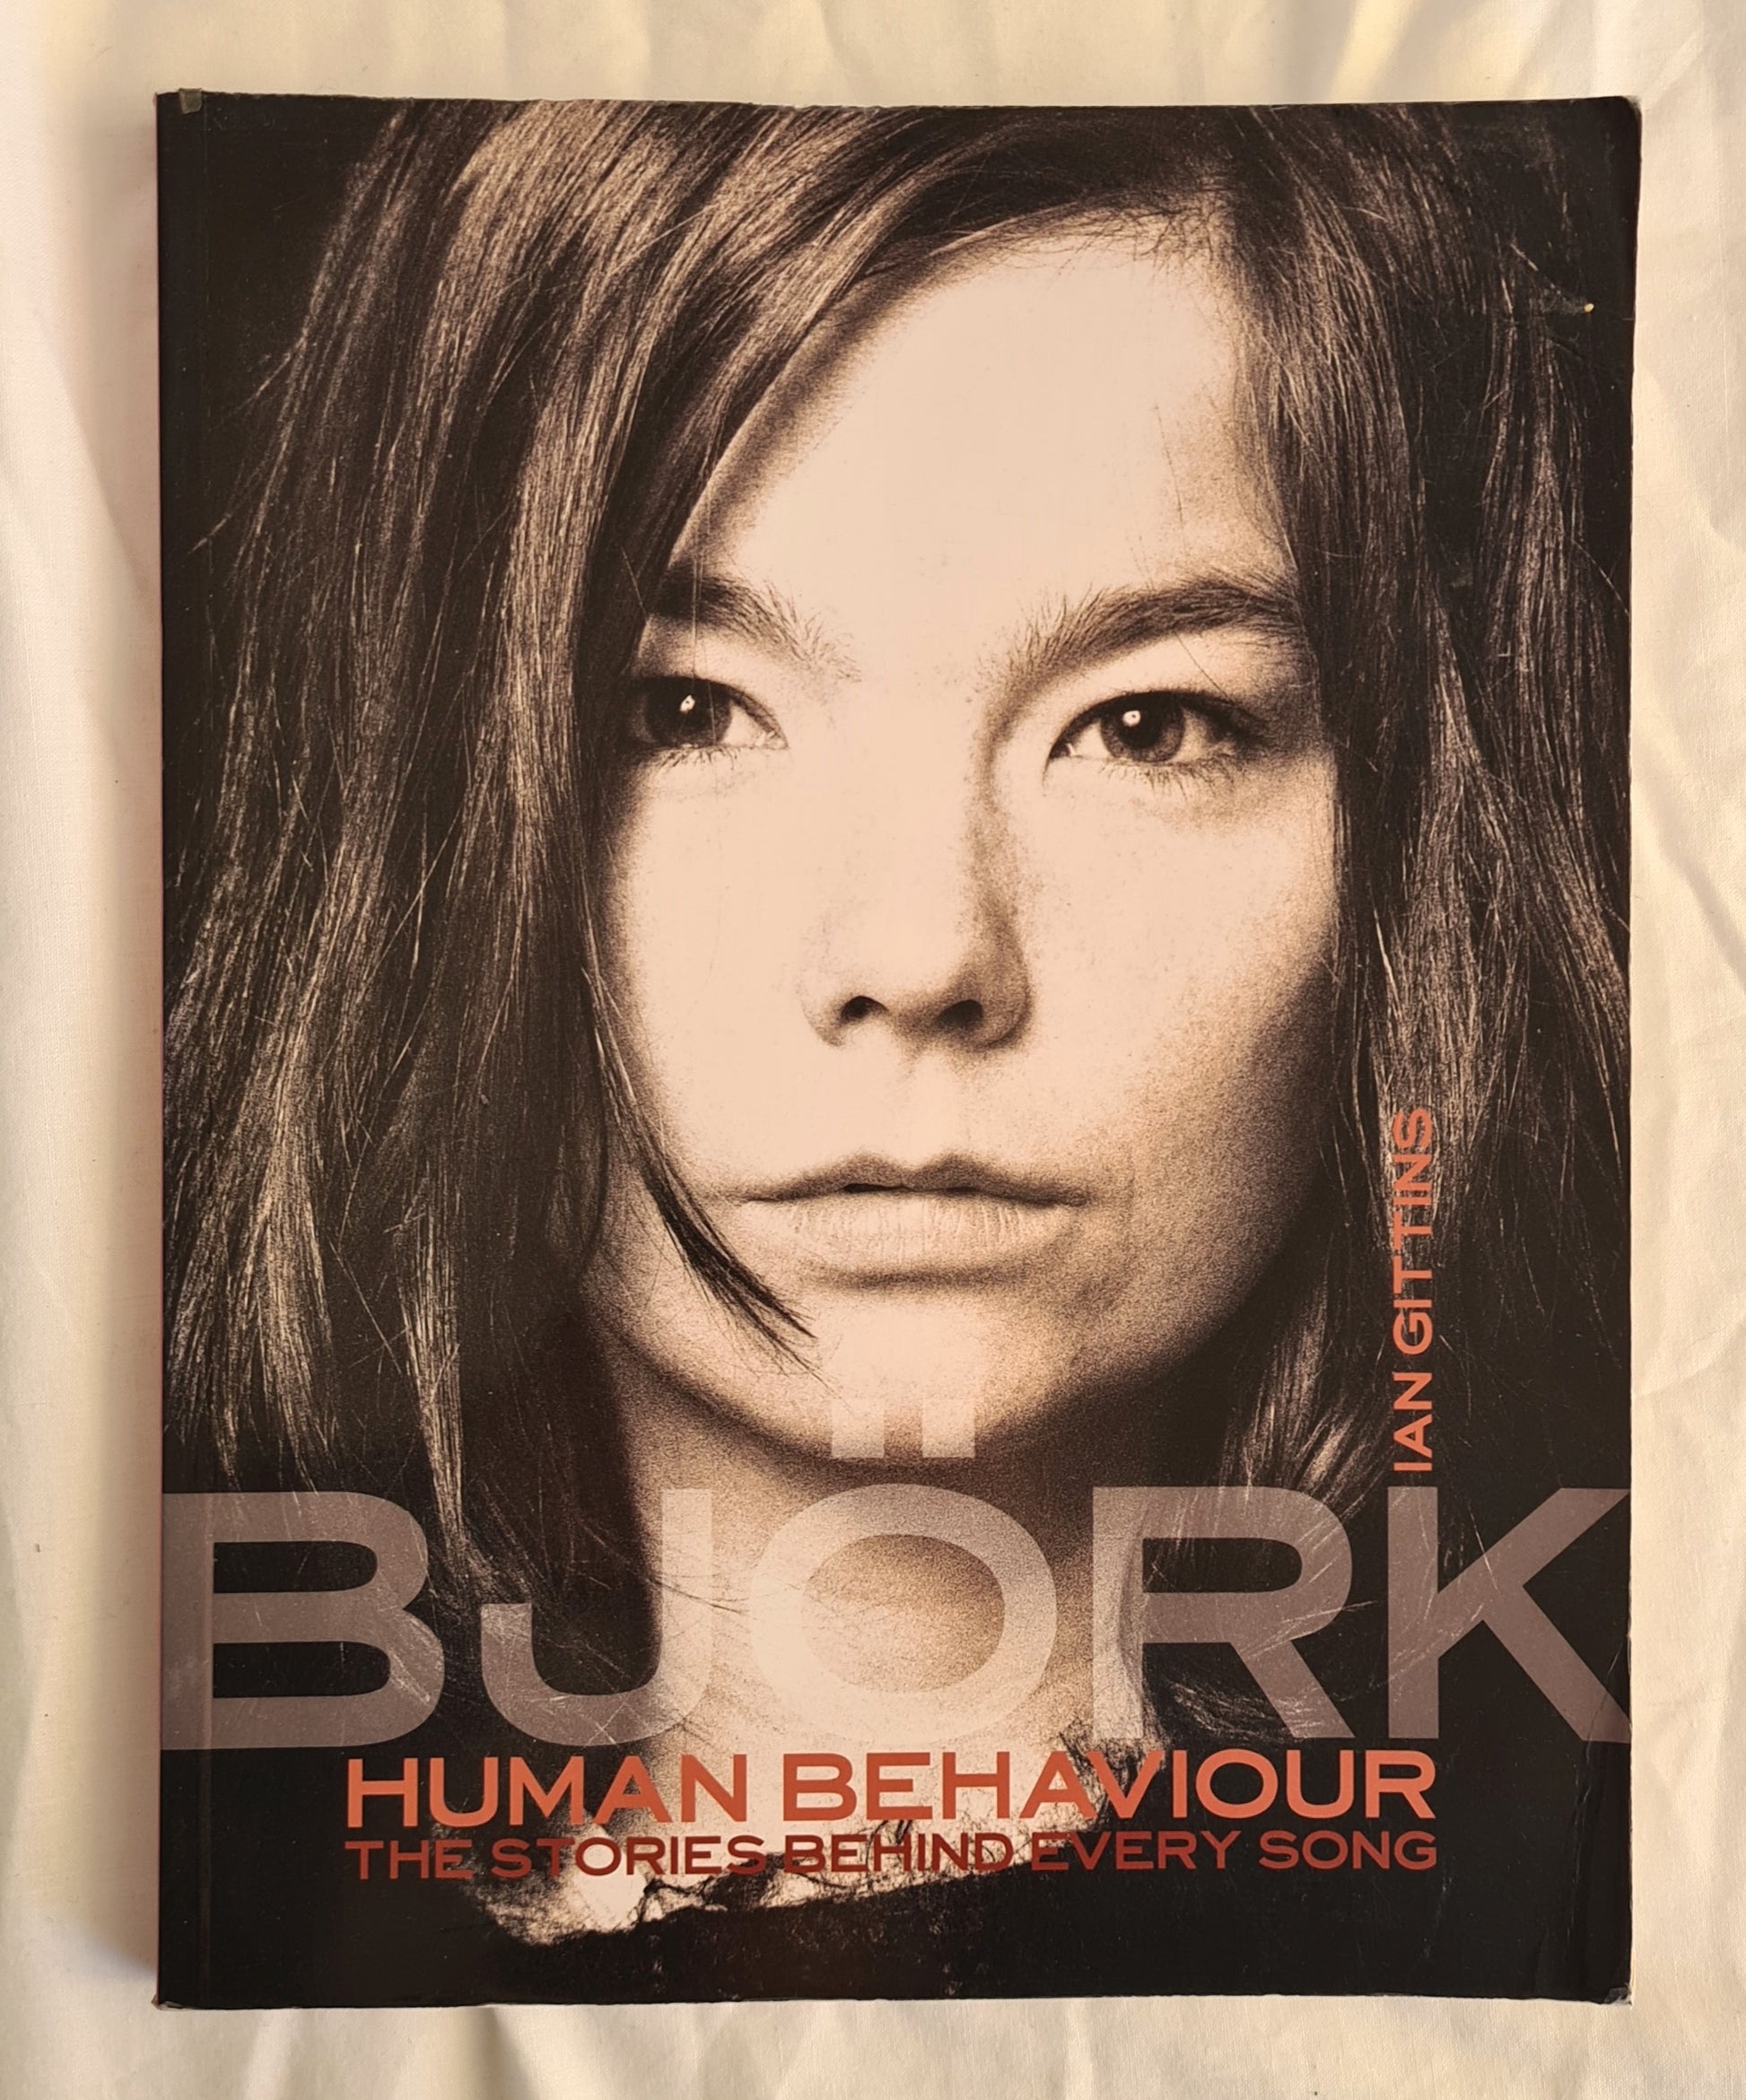 Bjork: Human Behaviour  The Stories Behind Every Song  by Ian Gittins